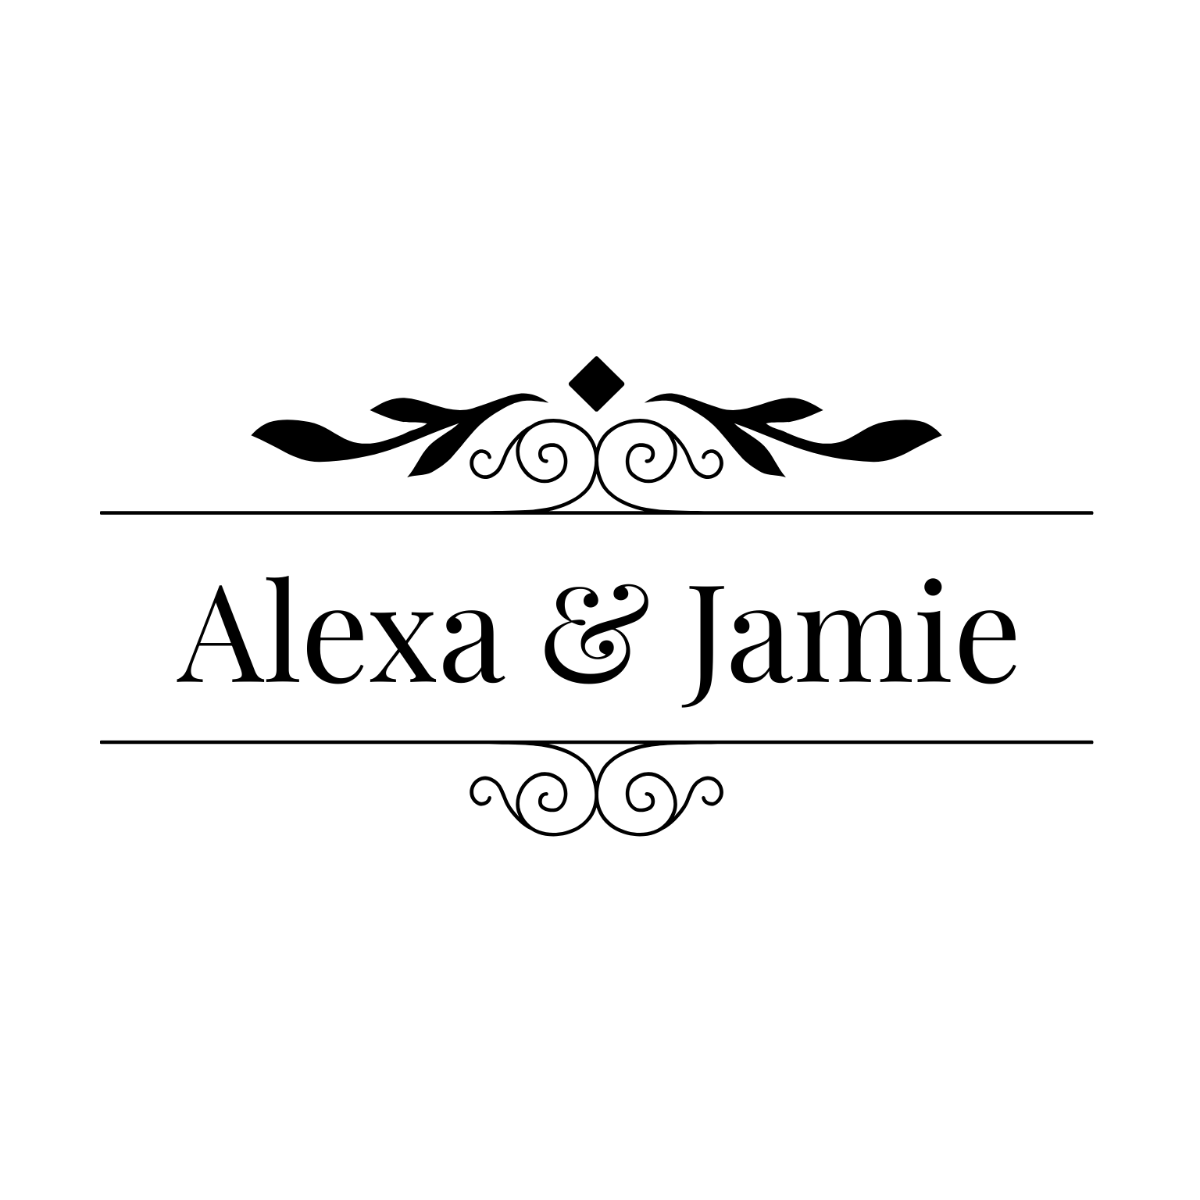 Free Wedding Name Silhouette Template